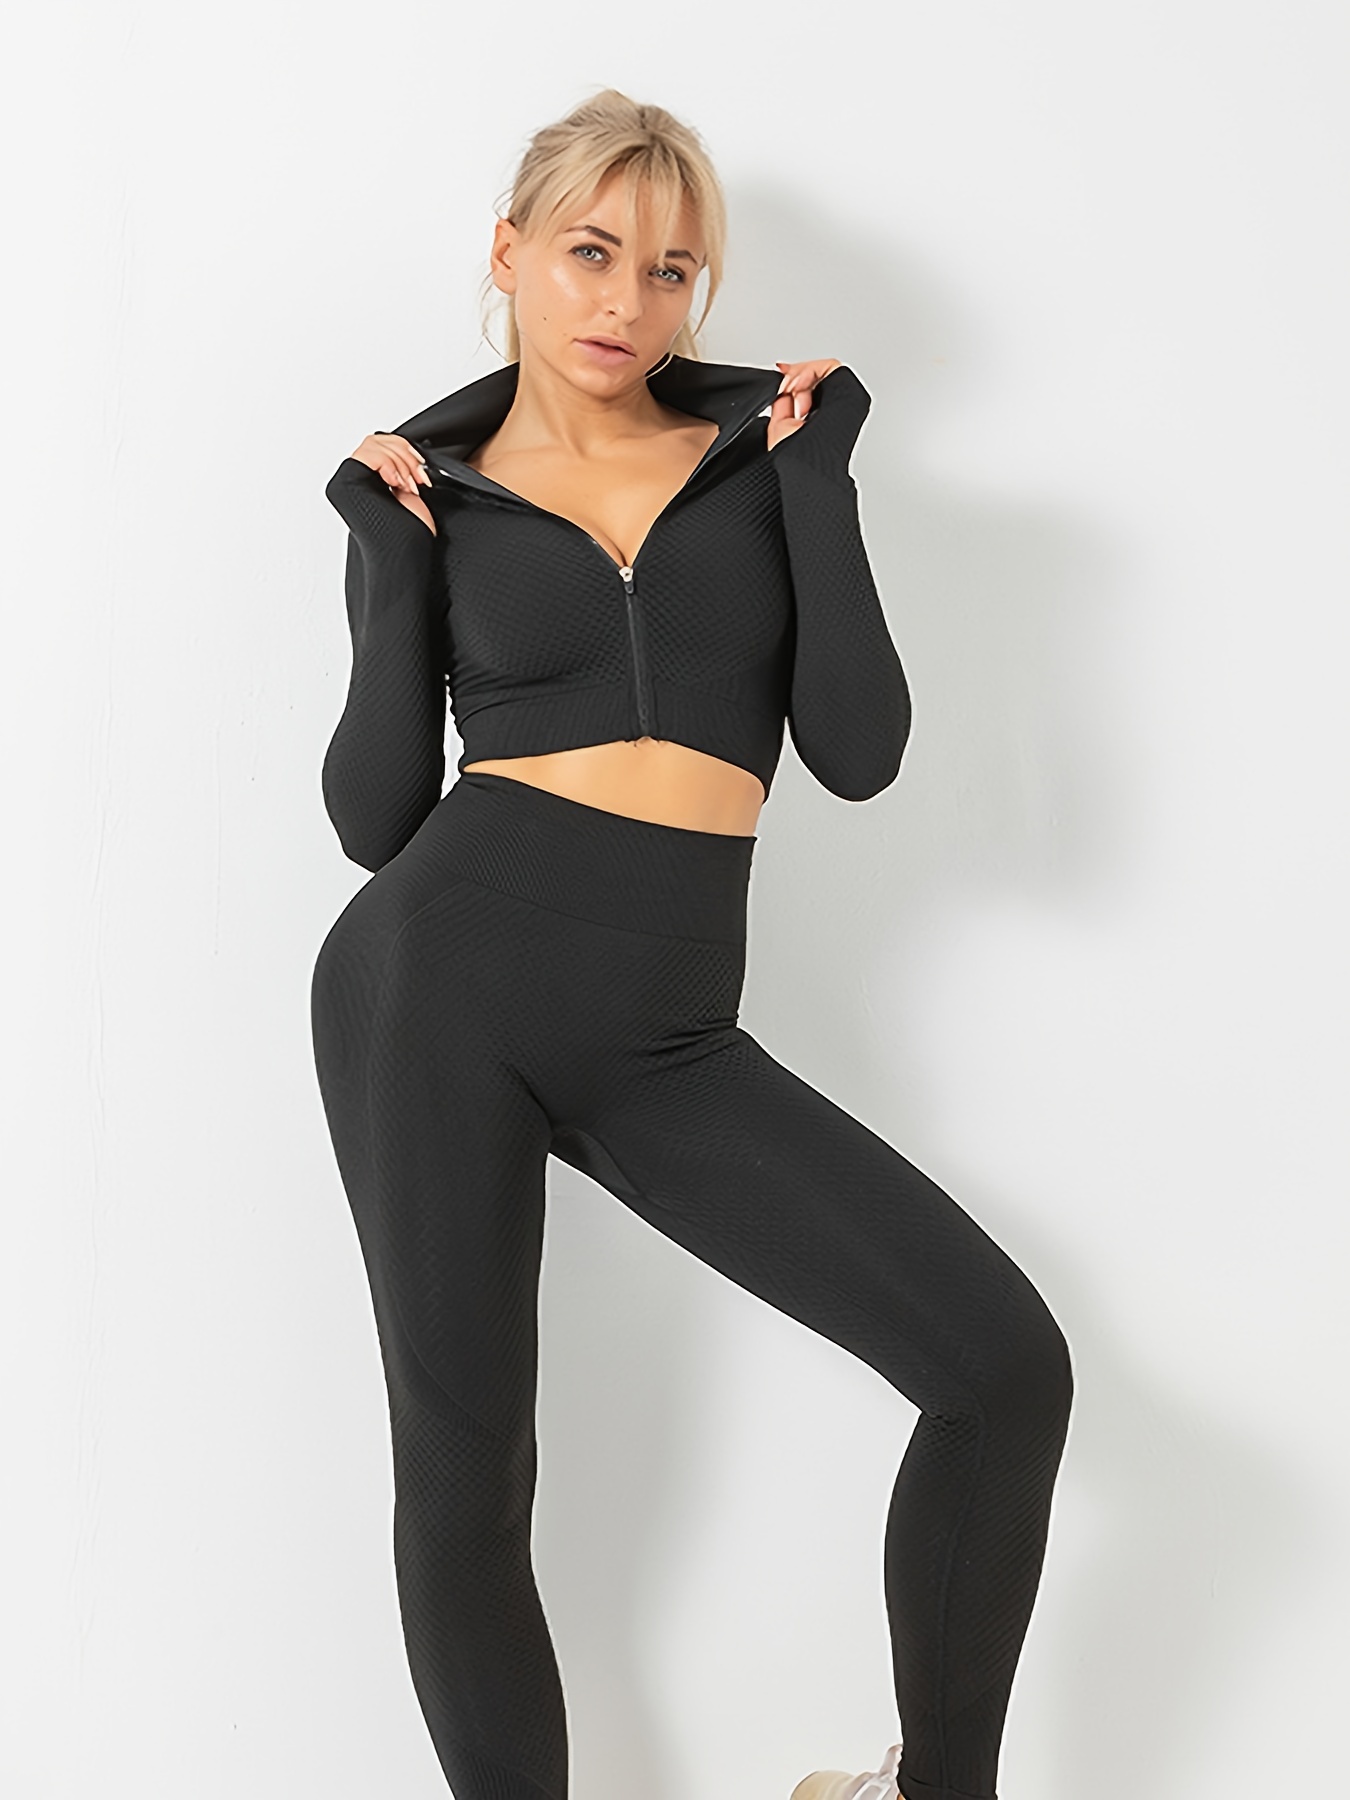 Buy Women's 3 Pieces Workout Clothes Set Jacket Tank Top Leggings Outfit Sets  Women, Black, L-XL at